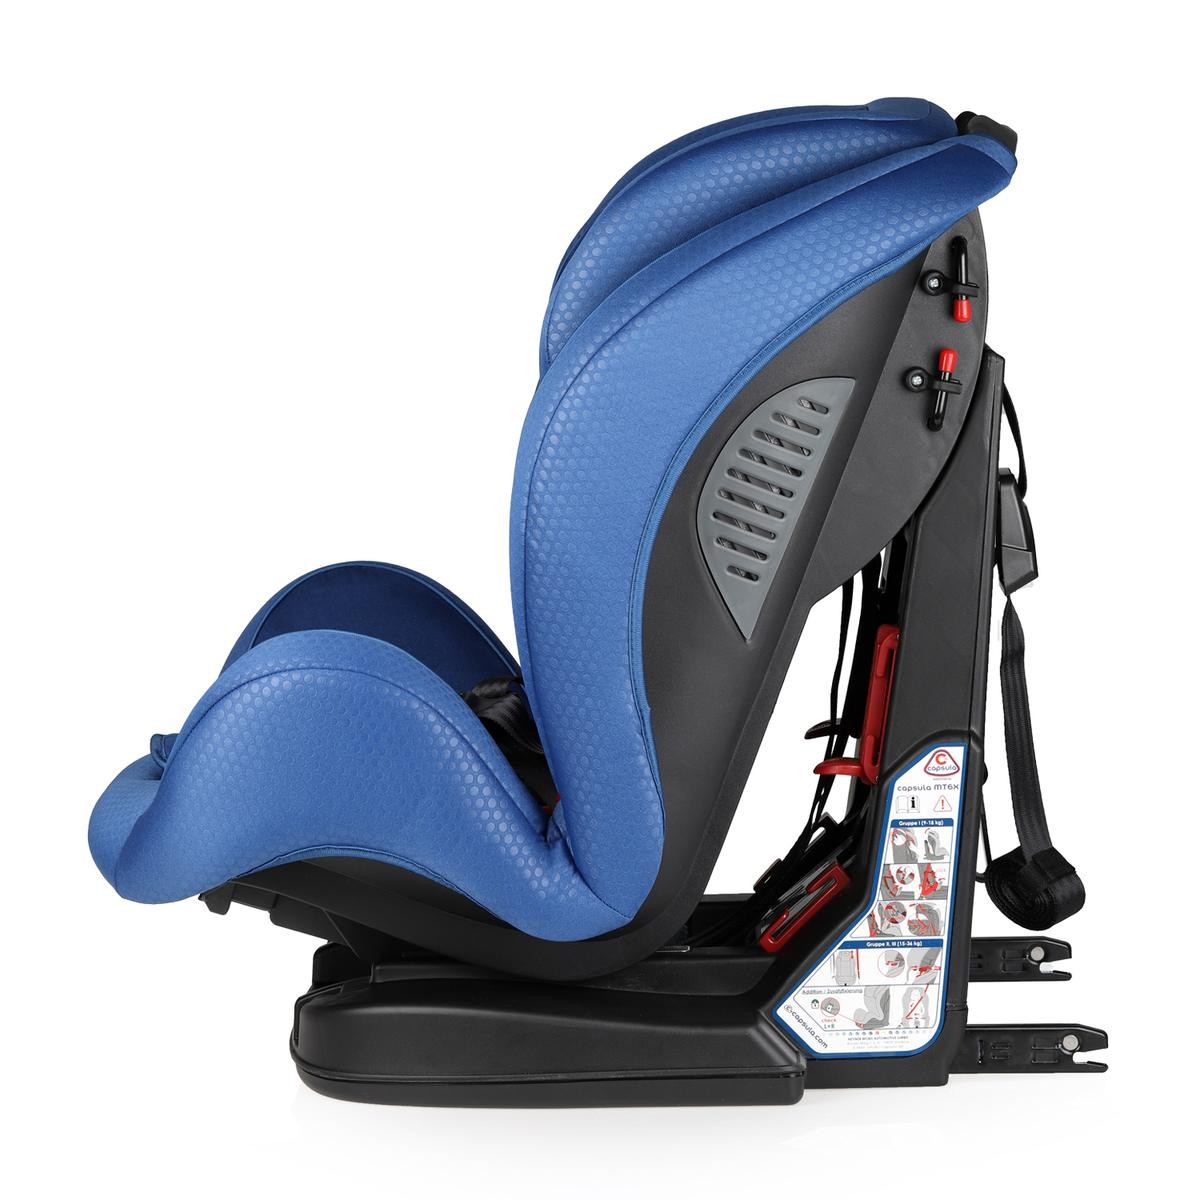 OEM-quality capsula 771140 Child car seat